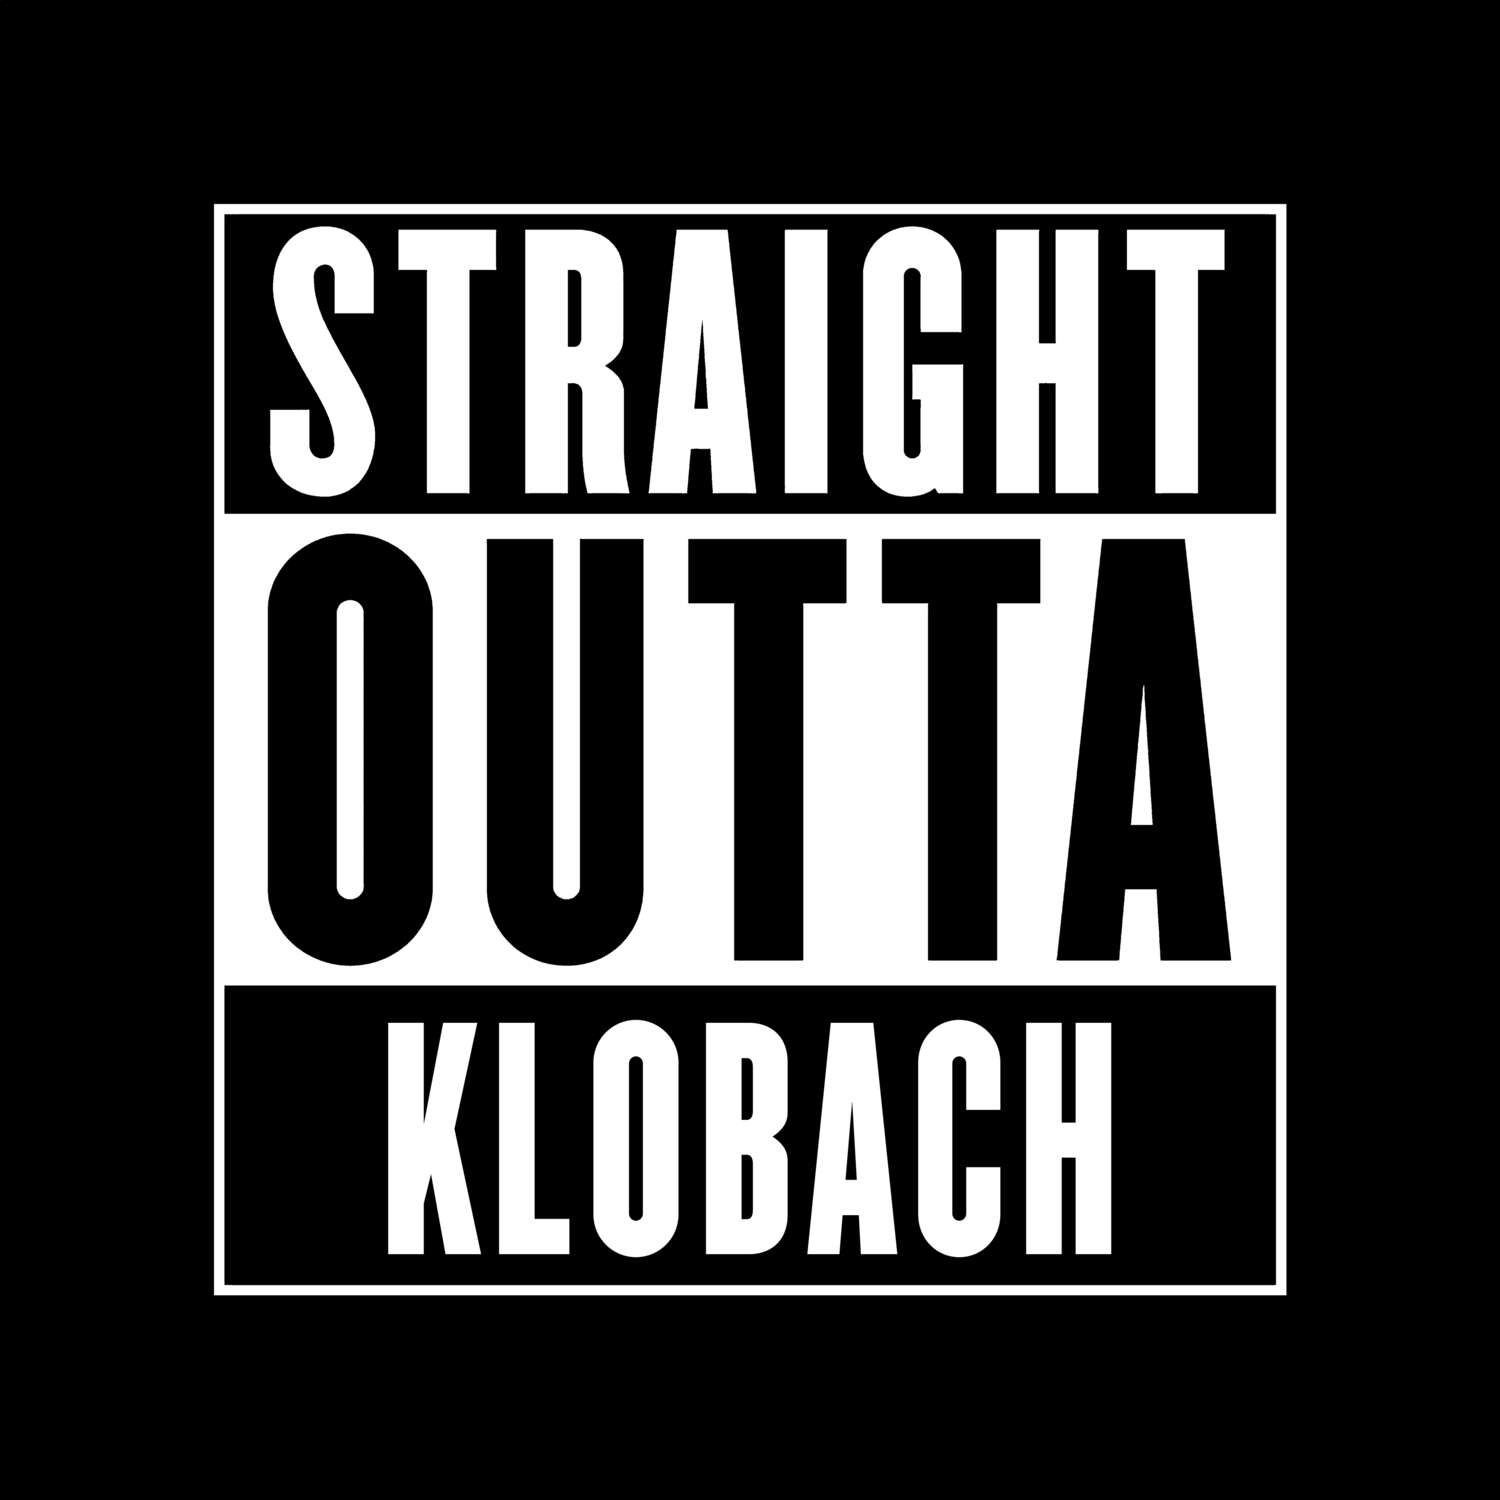 Klobach T-Shirt »Straight Outta«